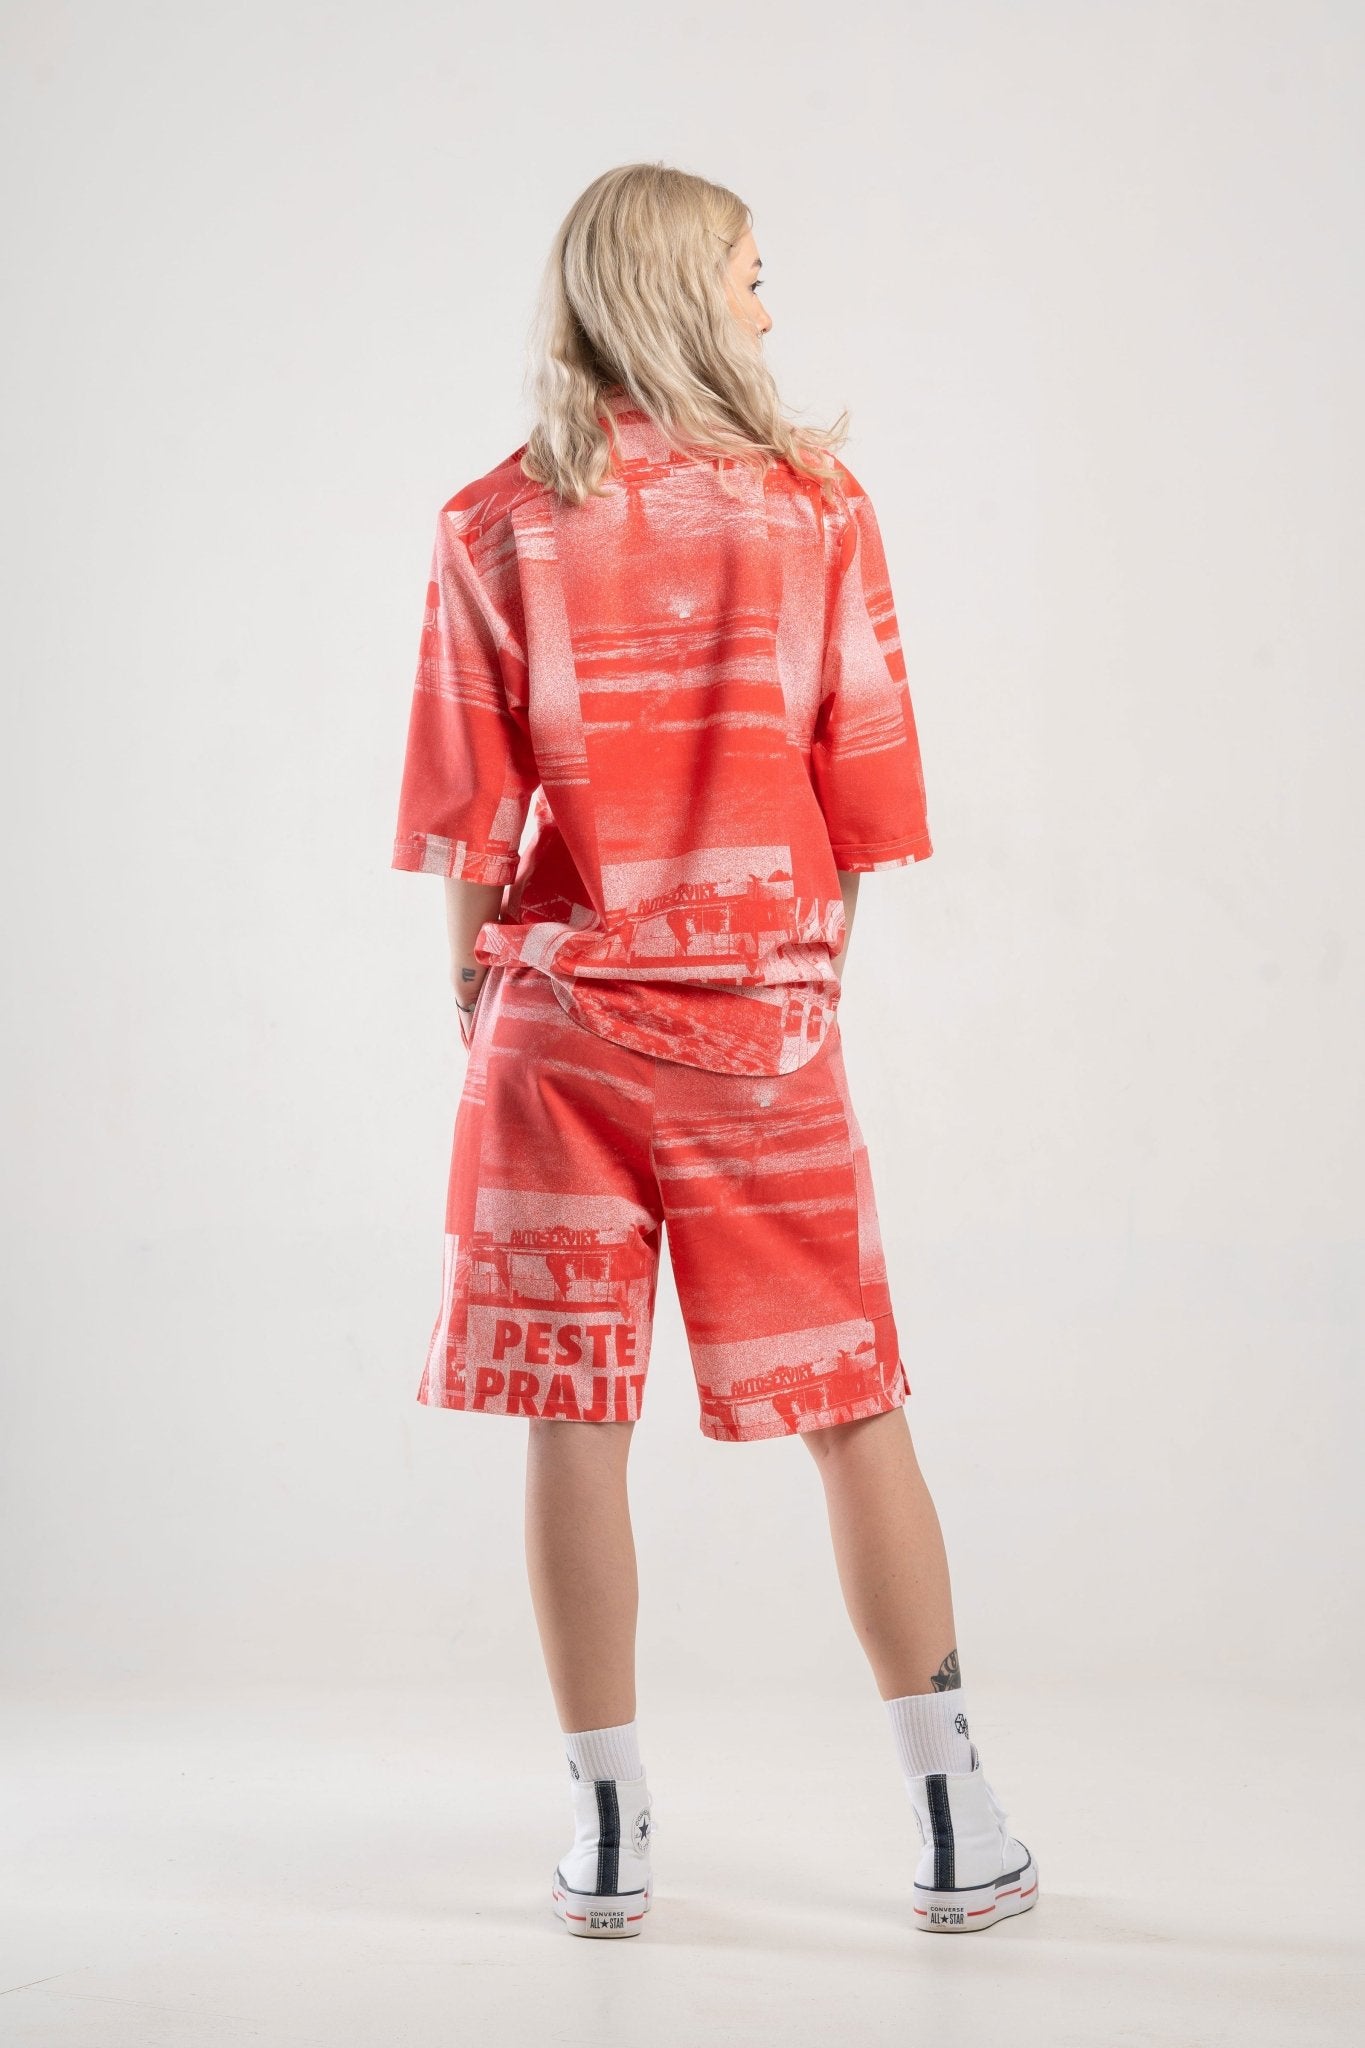 Bermuda Shorts O.Beach Mamaia (recycled fabric) - mysimplicated